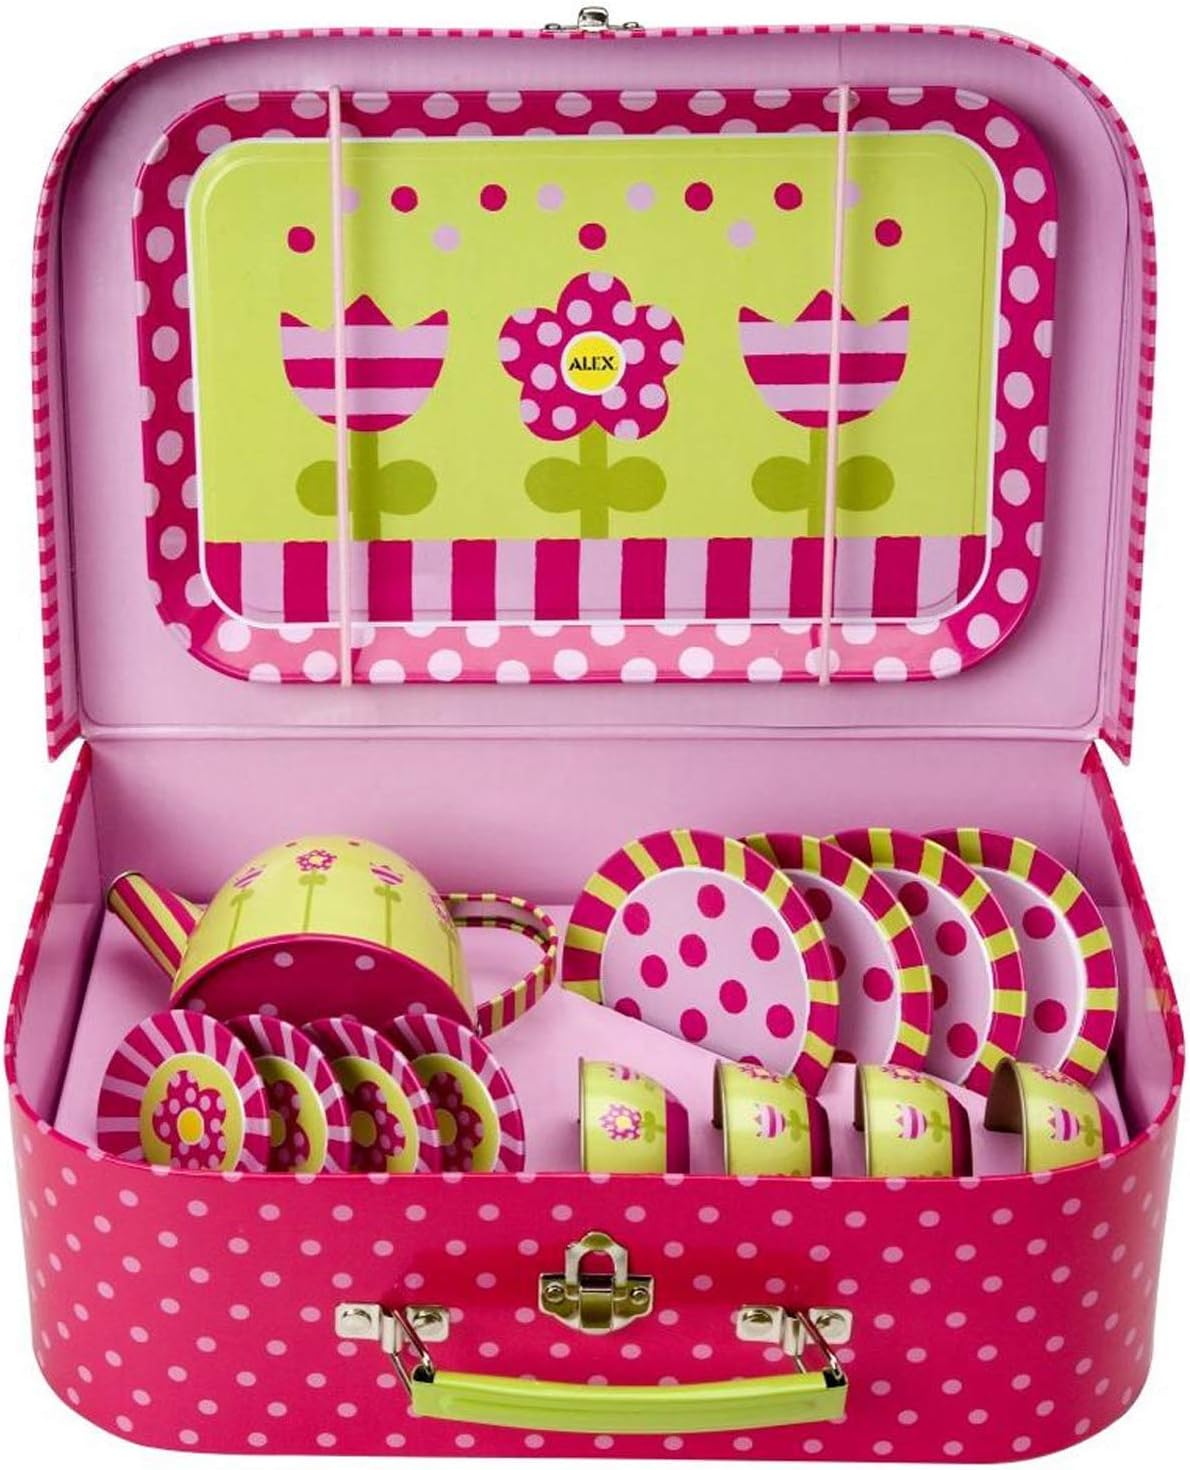 Tin Tea Set in Suitcase